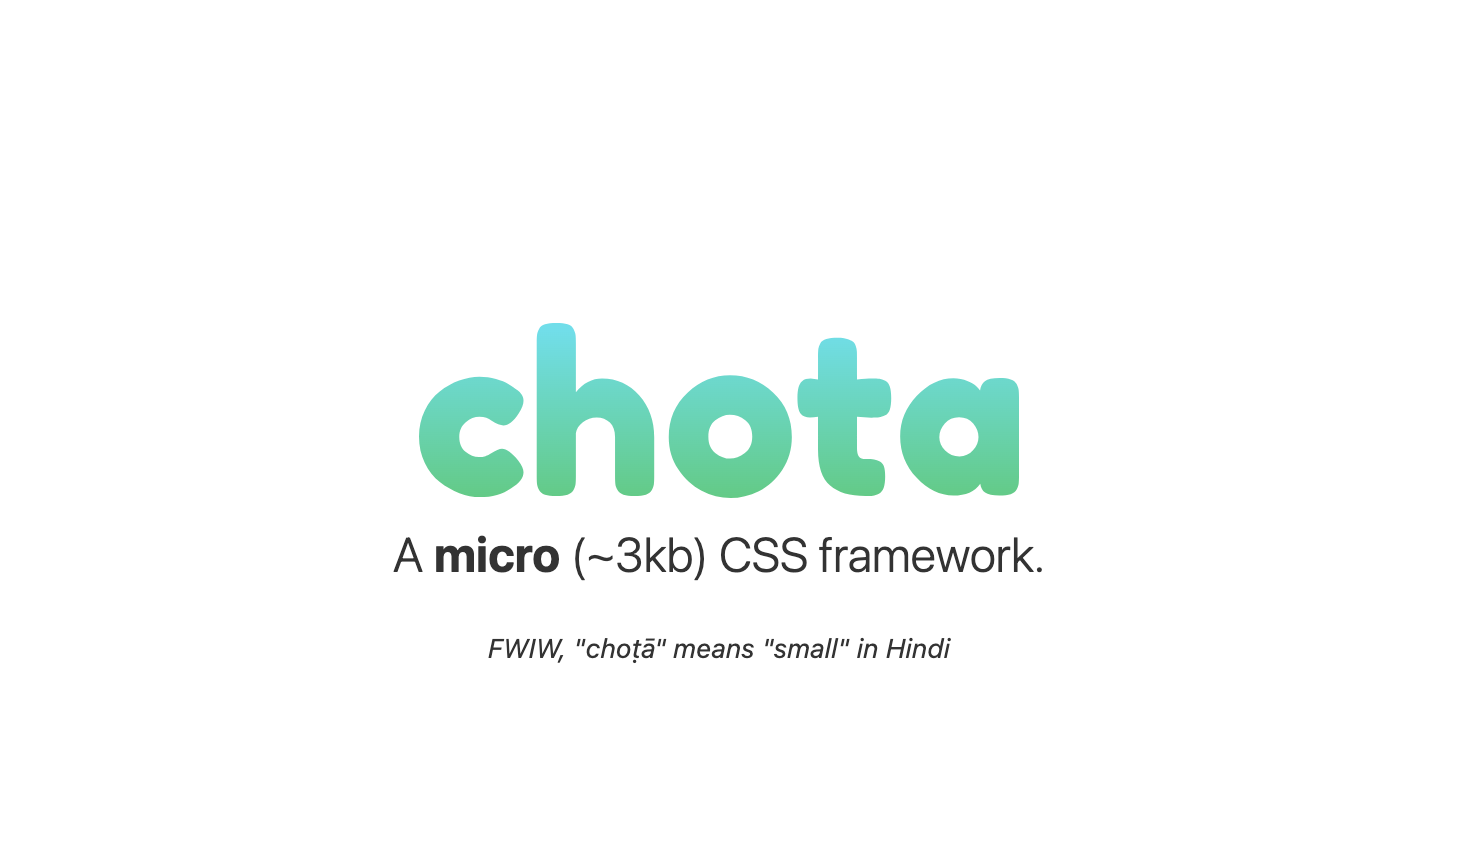 css framework, Chota